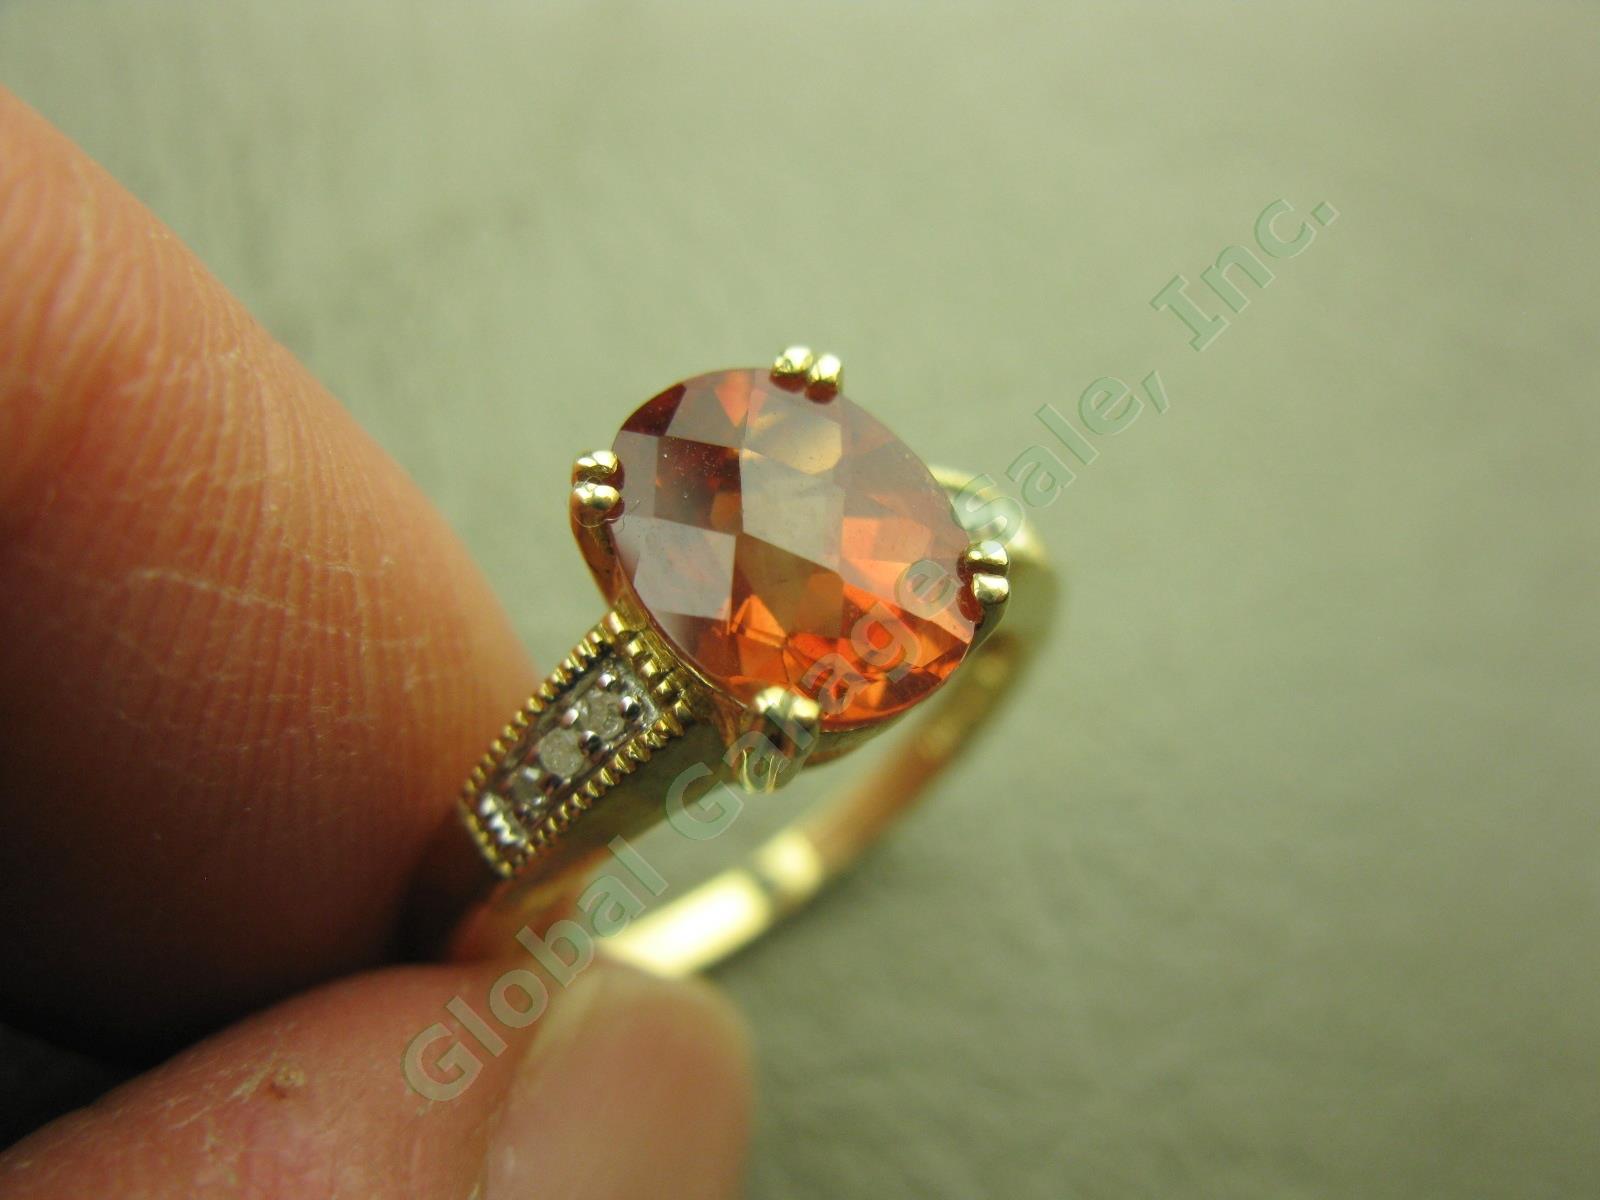 19x 14k 10k Gold Gemstone Rings Lot Earrings 57.7 Grams Not Scrap $1200+ Value!! 5